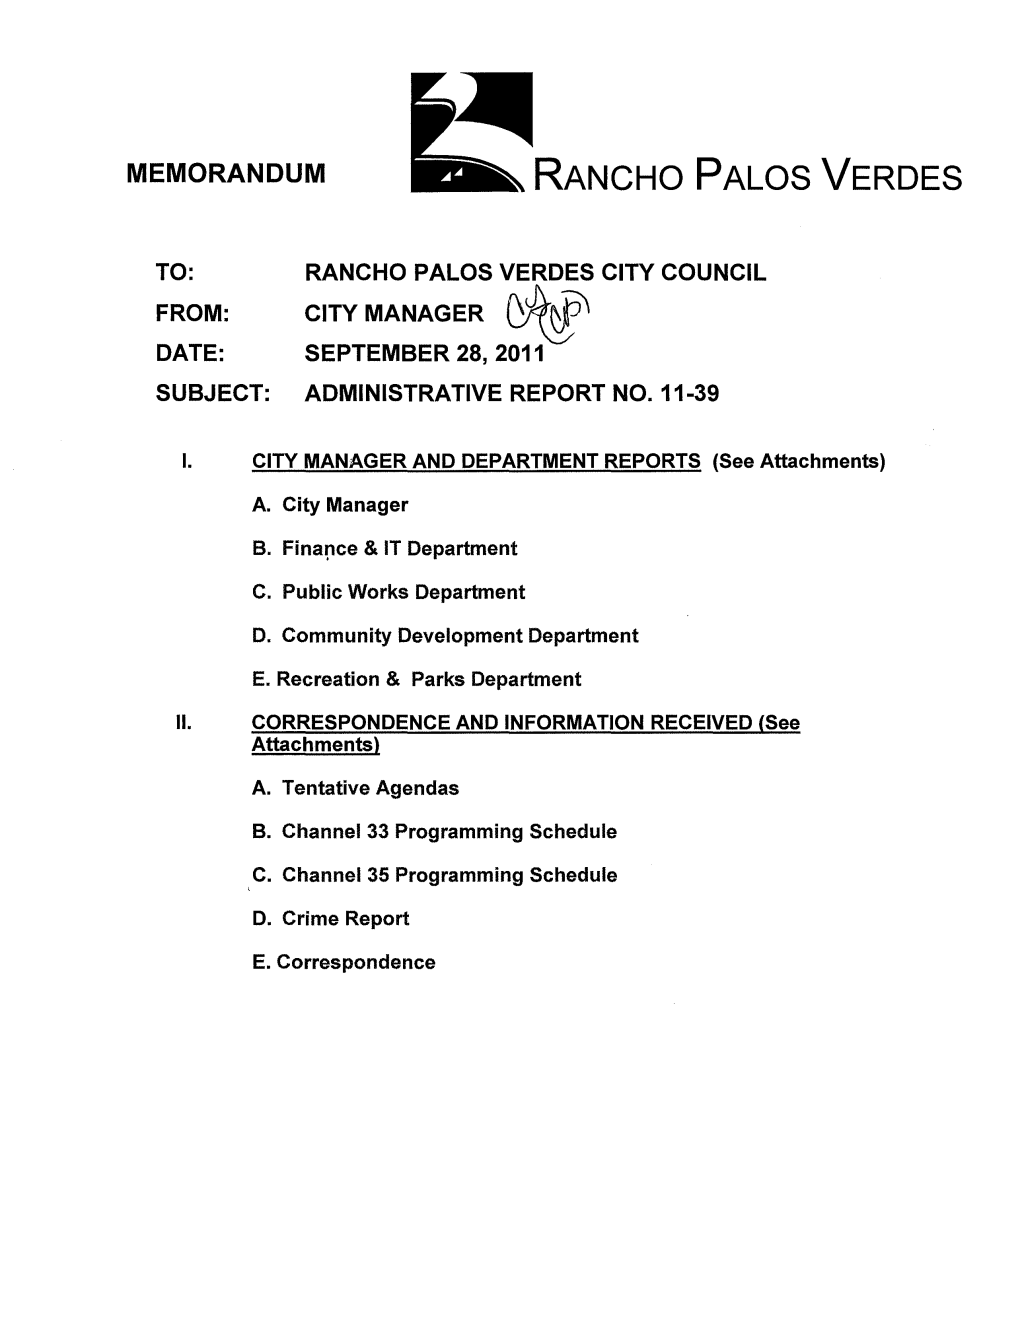 Administrative Report No. 11-39